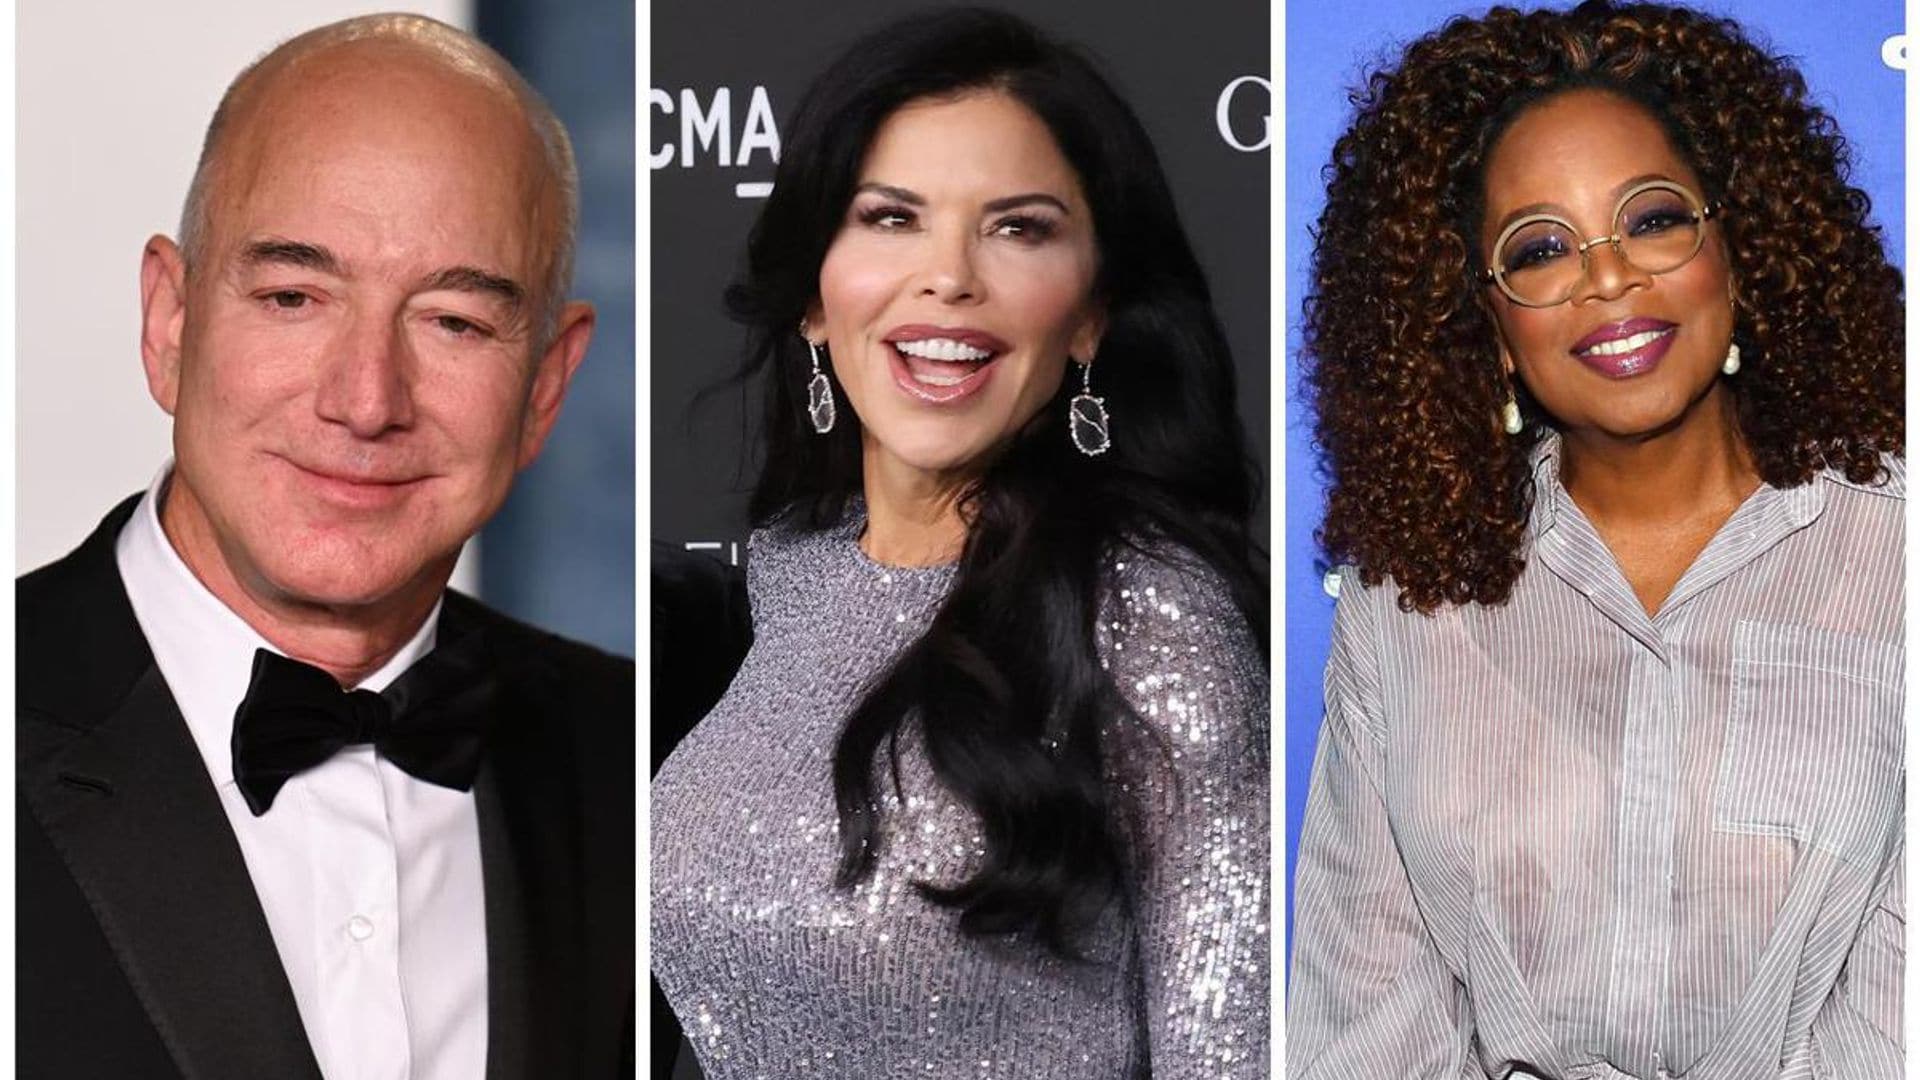 Jeff Bezos and Lauren Sanchez welcome Oprah Winfrey aboard their luxurious yacht